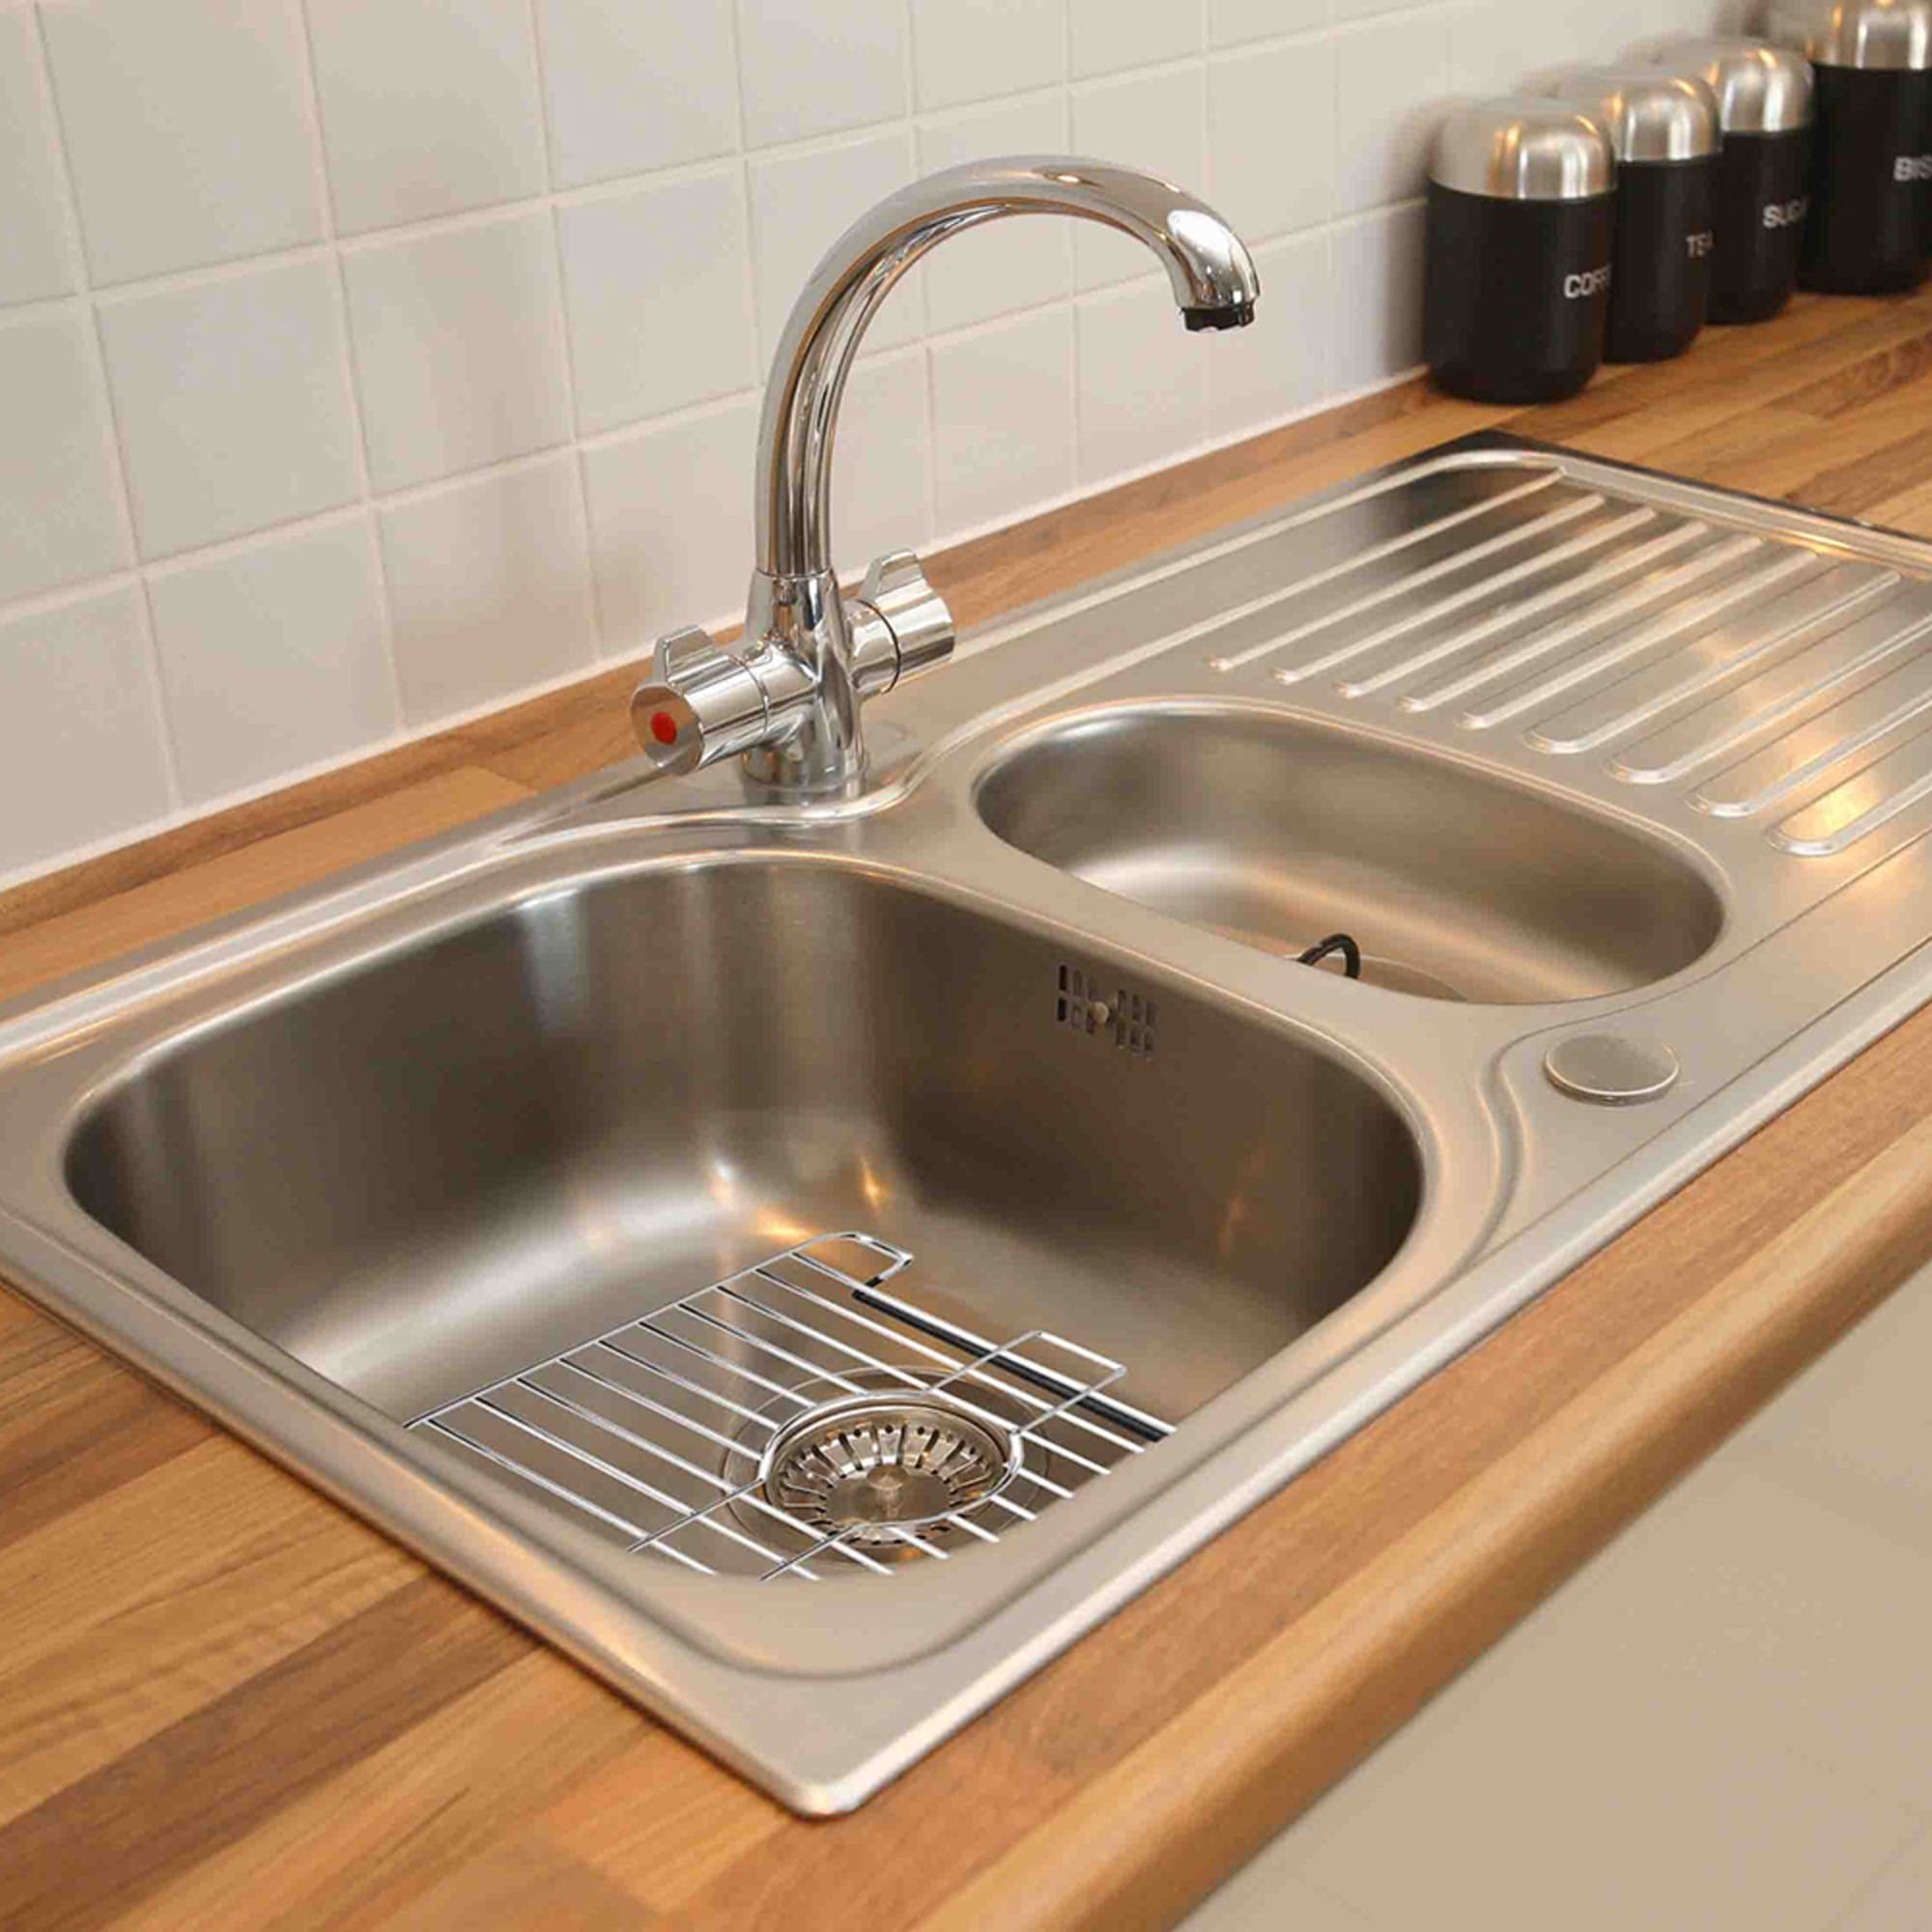 Home Basics Over the Sink Counter Kitchen Station, Chrome, KITCHEN  ORGANIZATION